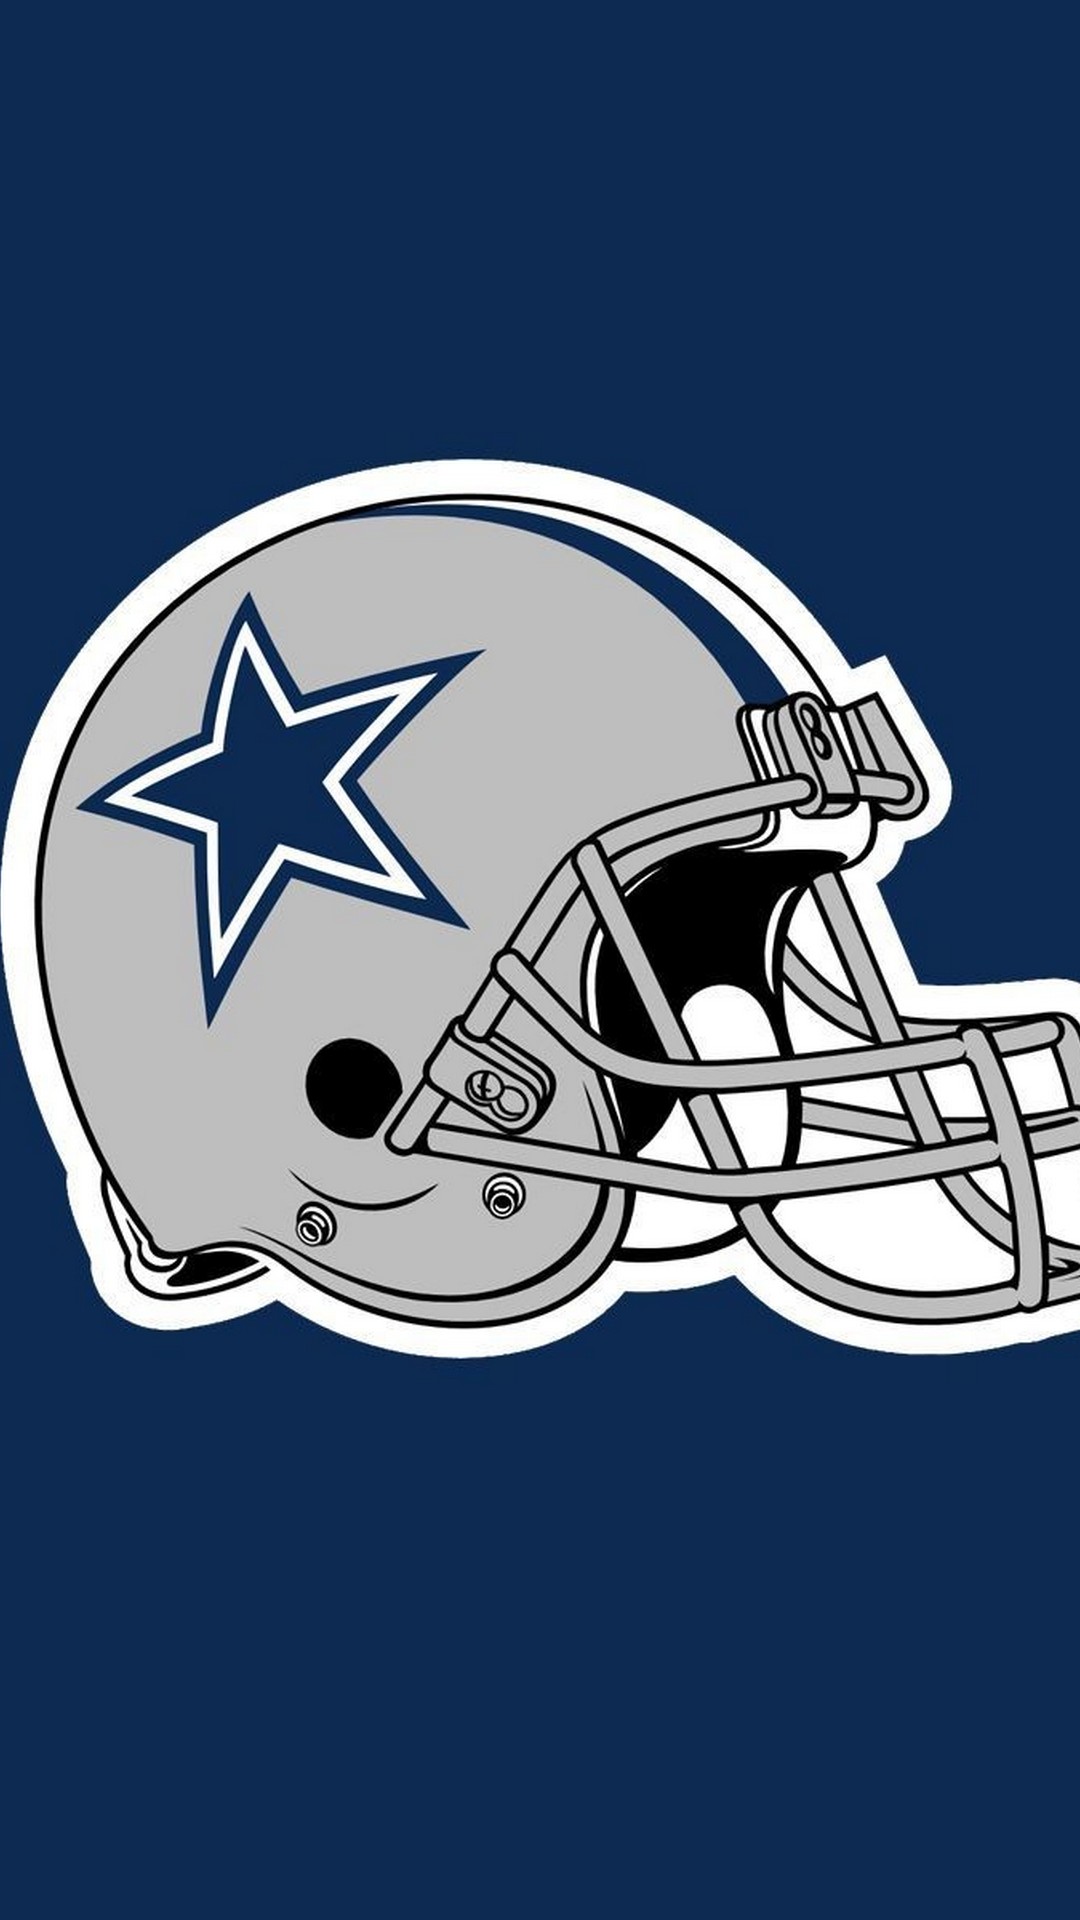 Dallas Cowboys Iphone Home Screen Wallpaper With High-resolution - Dallas Cowboy Helmet Clipart - HD Wallpaper 